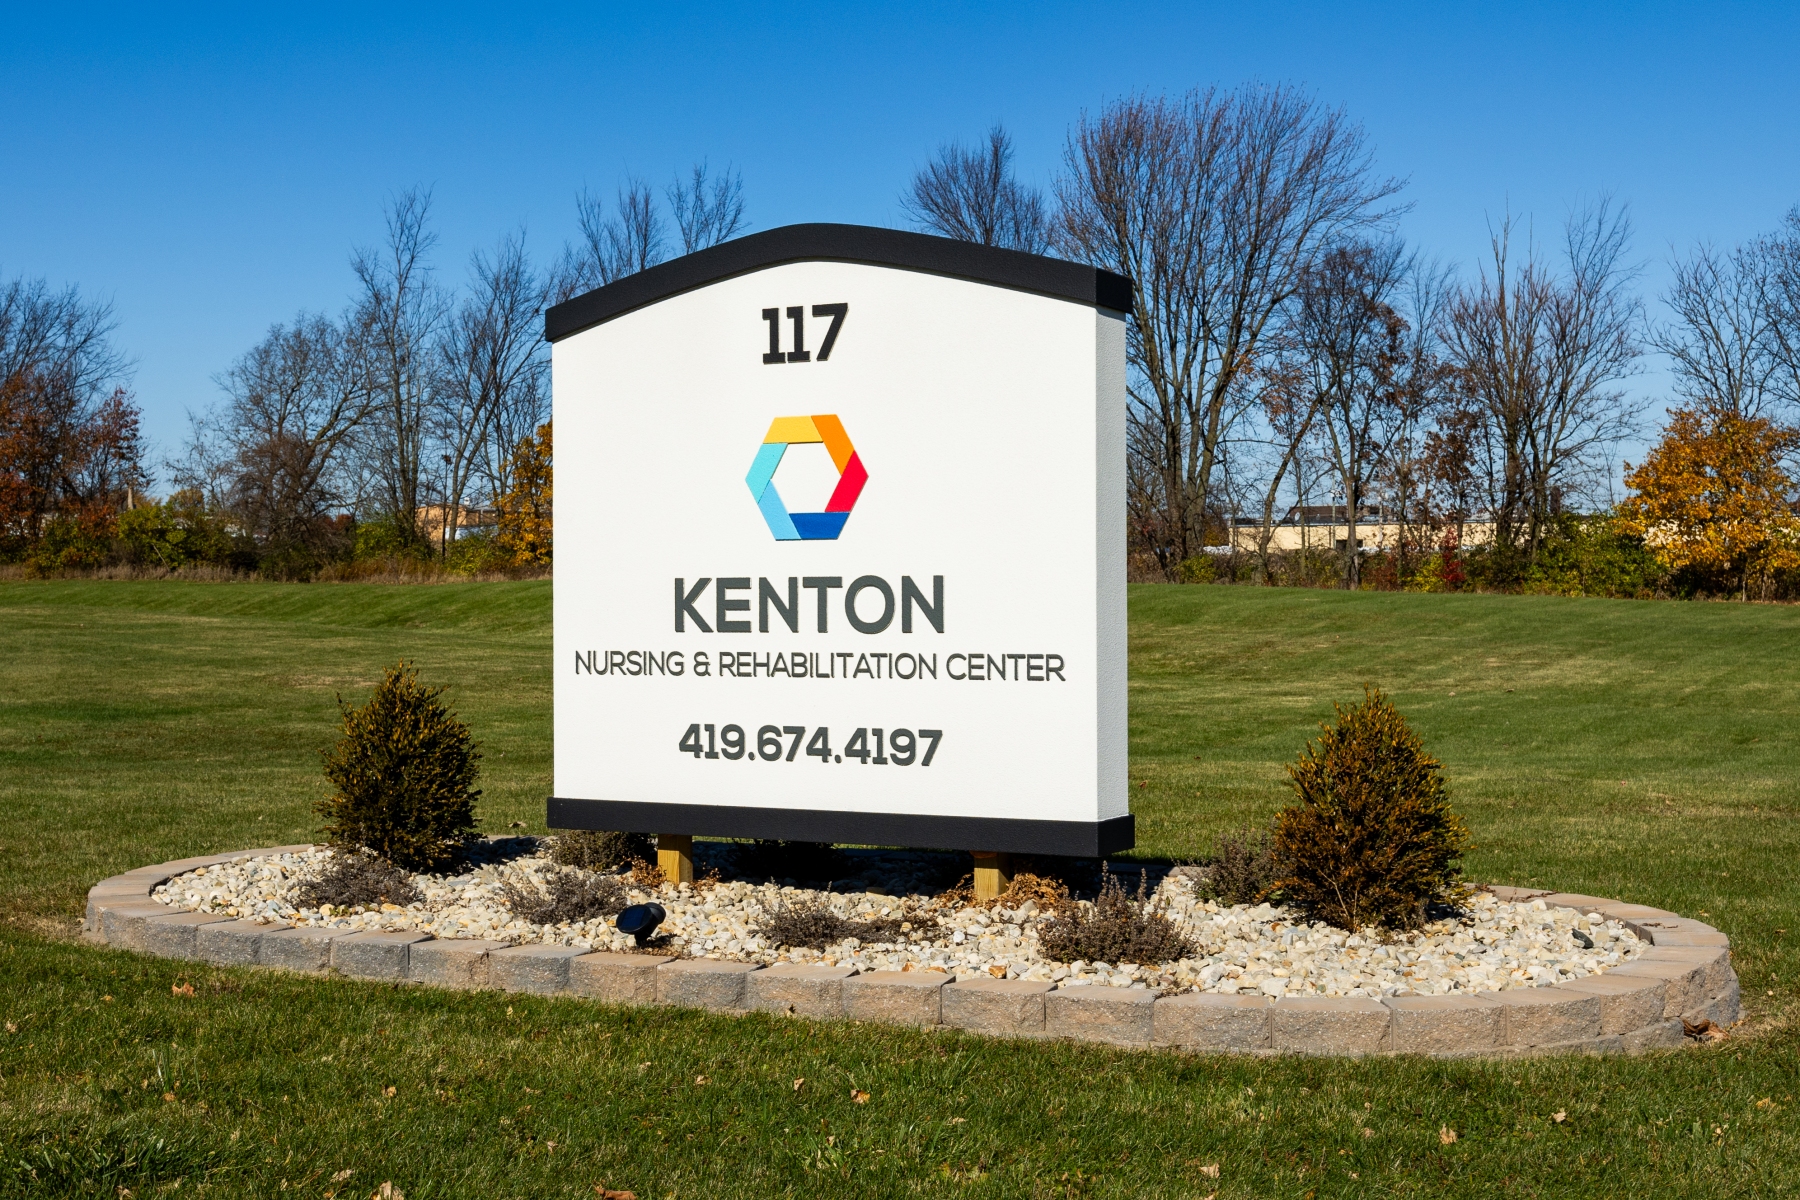 Kenton welcome sign